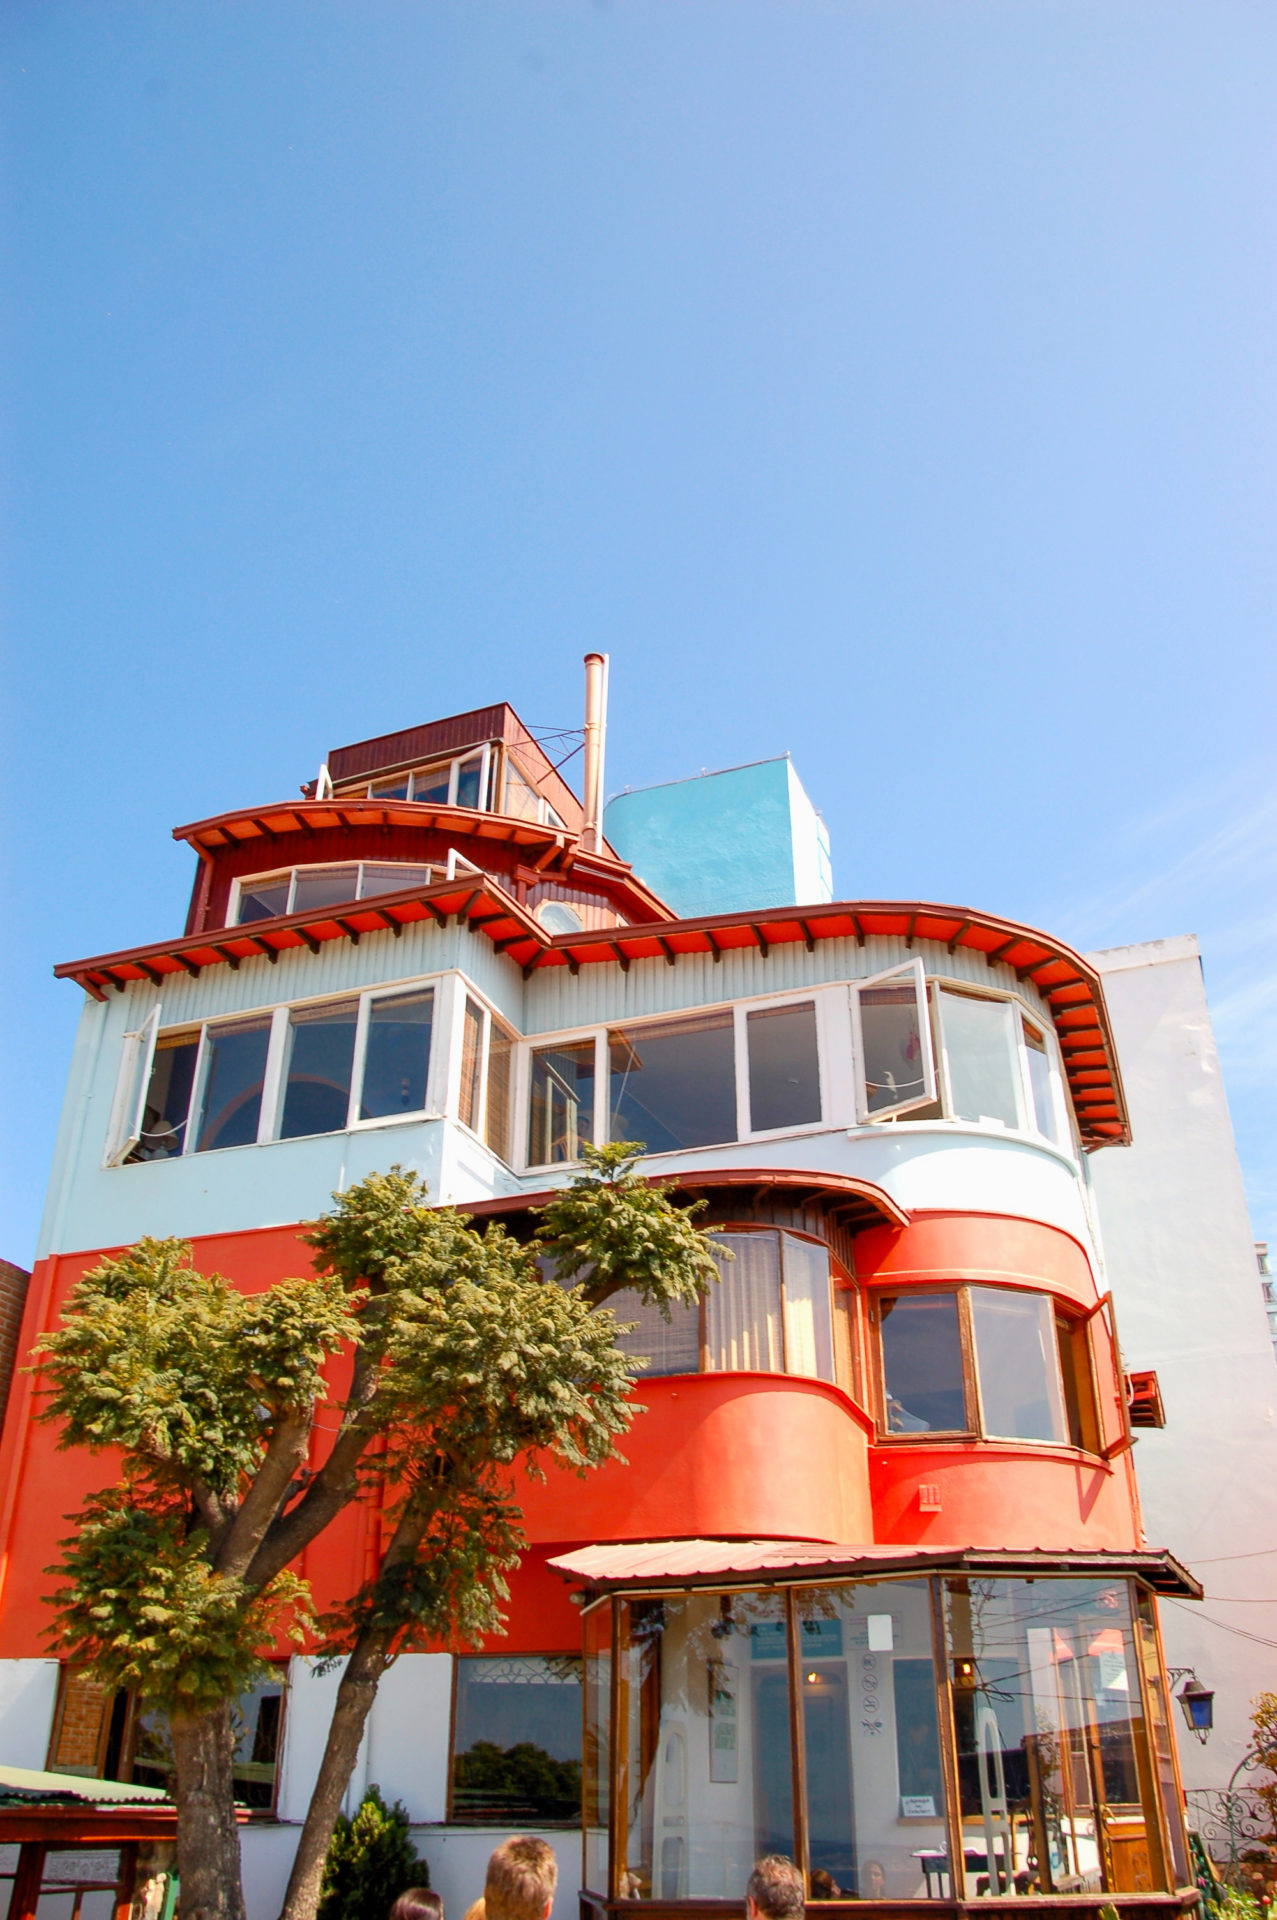 Das Haus von Pablo Neruda in Valparaiso in Chile